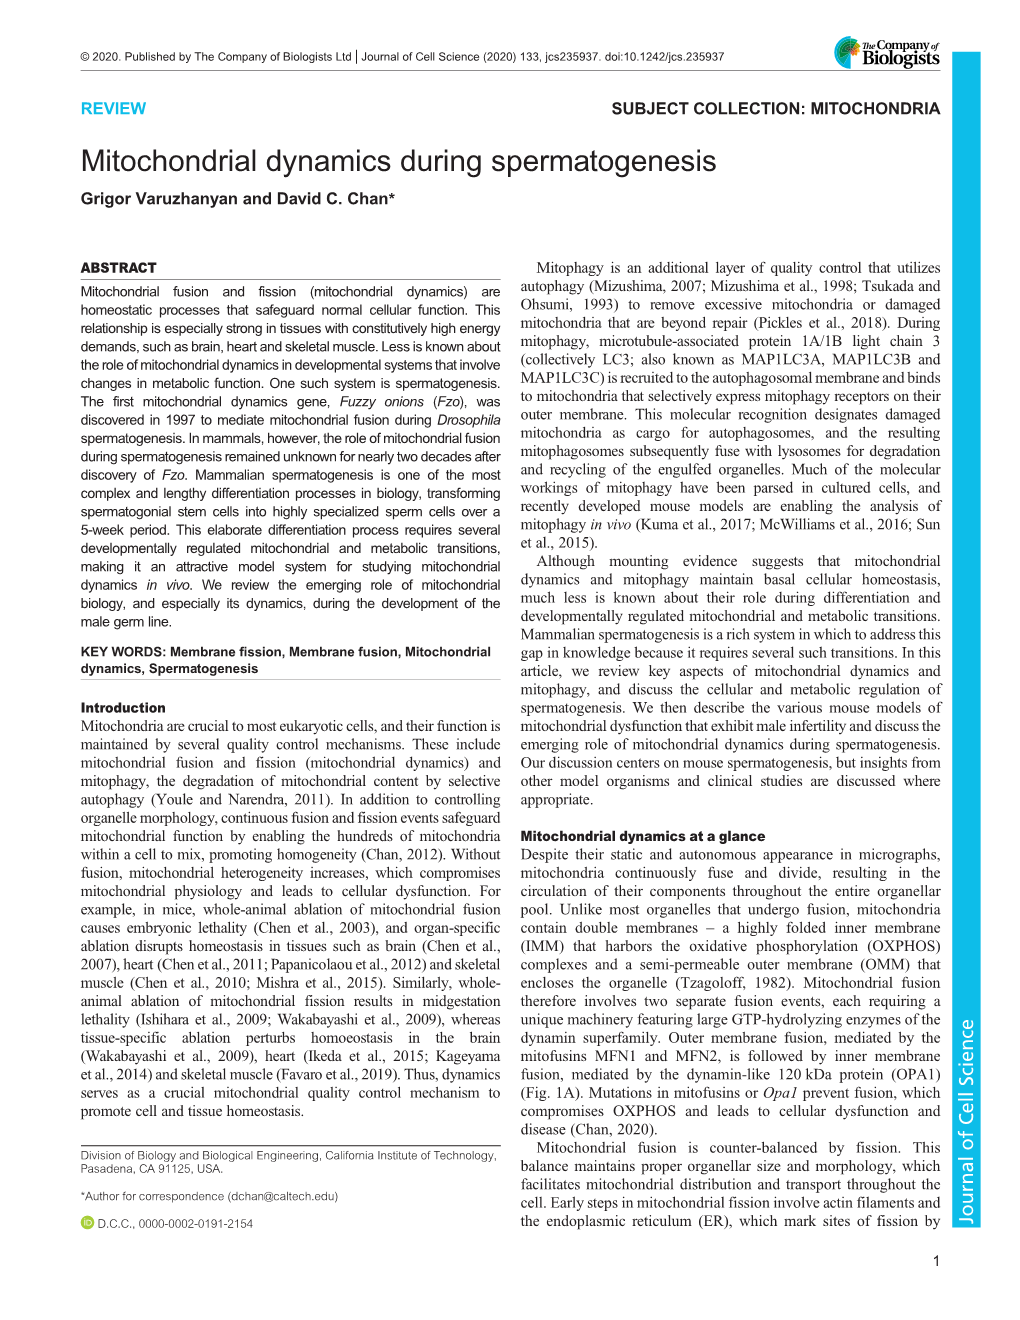 Mitochondrial Dynamics During Spermatogenesis Grigor Varuzhanyan and David C